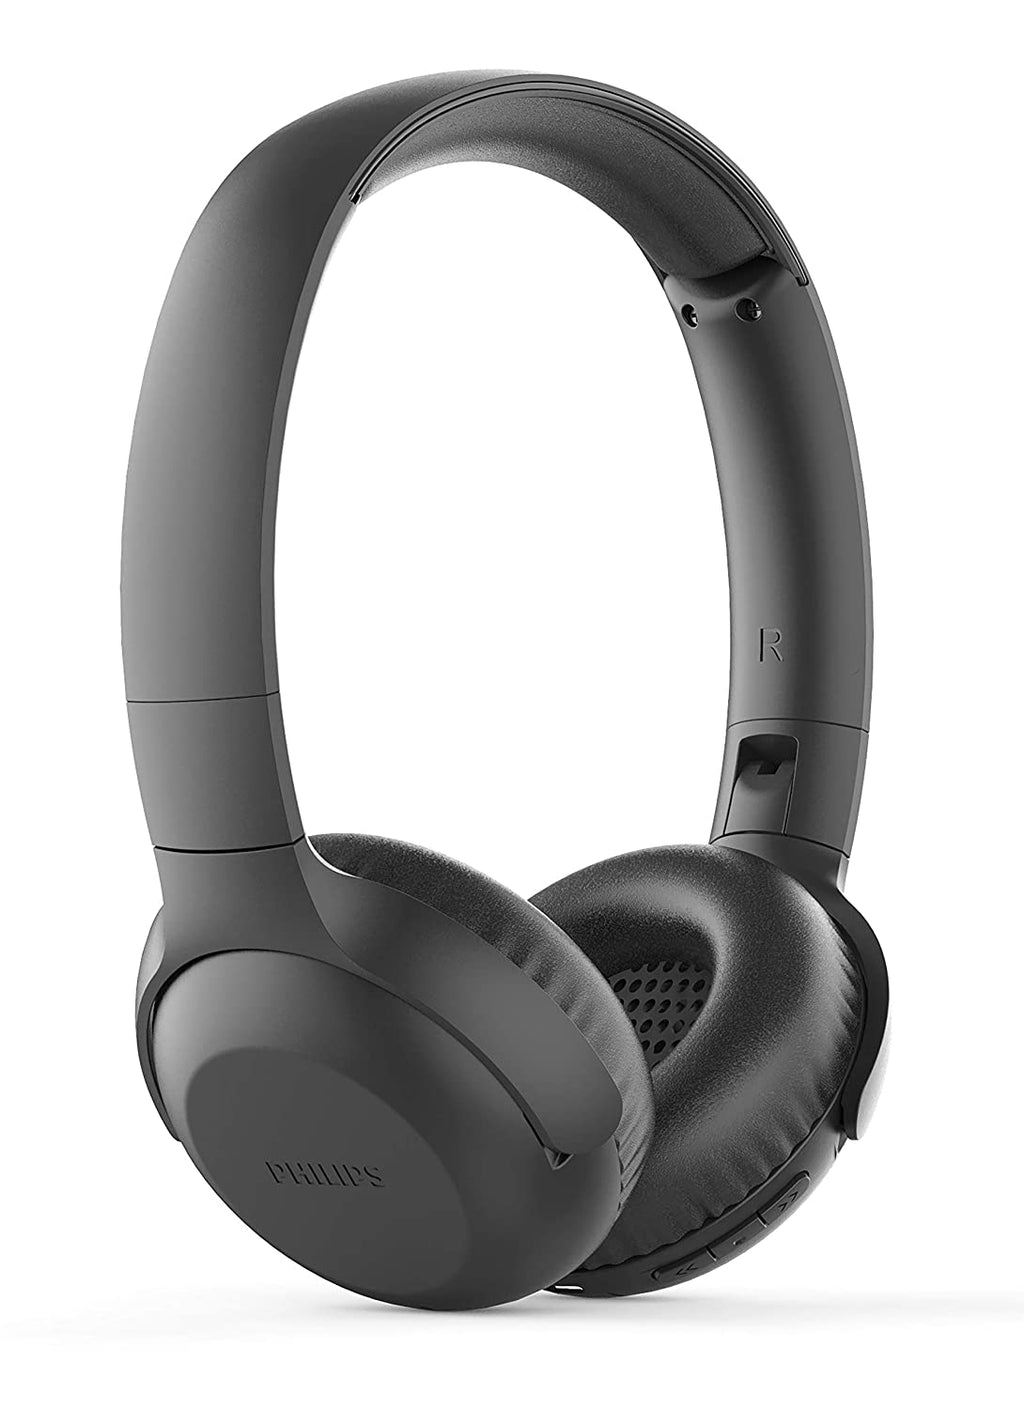 Philips Audios Upbeat Tauh202Bk Wireless Bluetooth 5.0 On-Ear Headphones